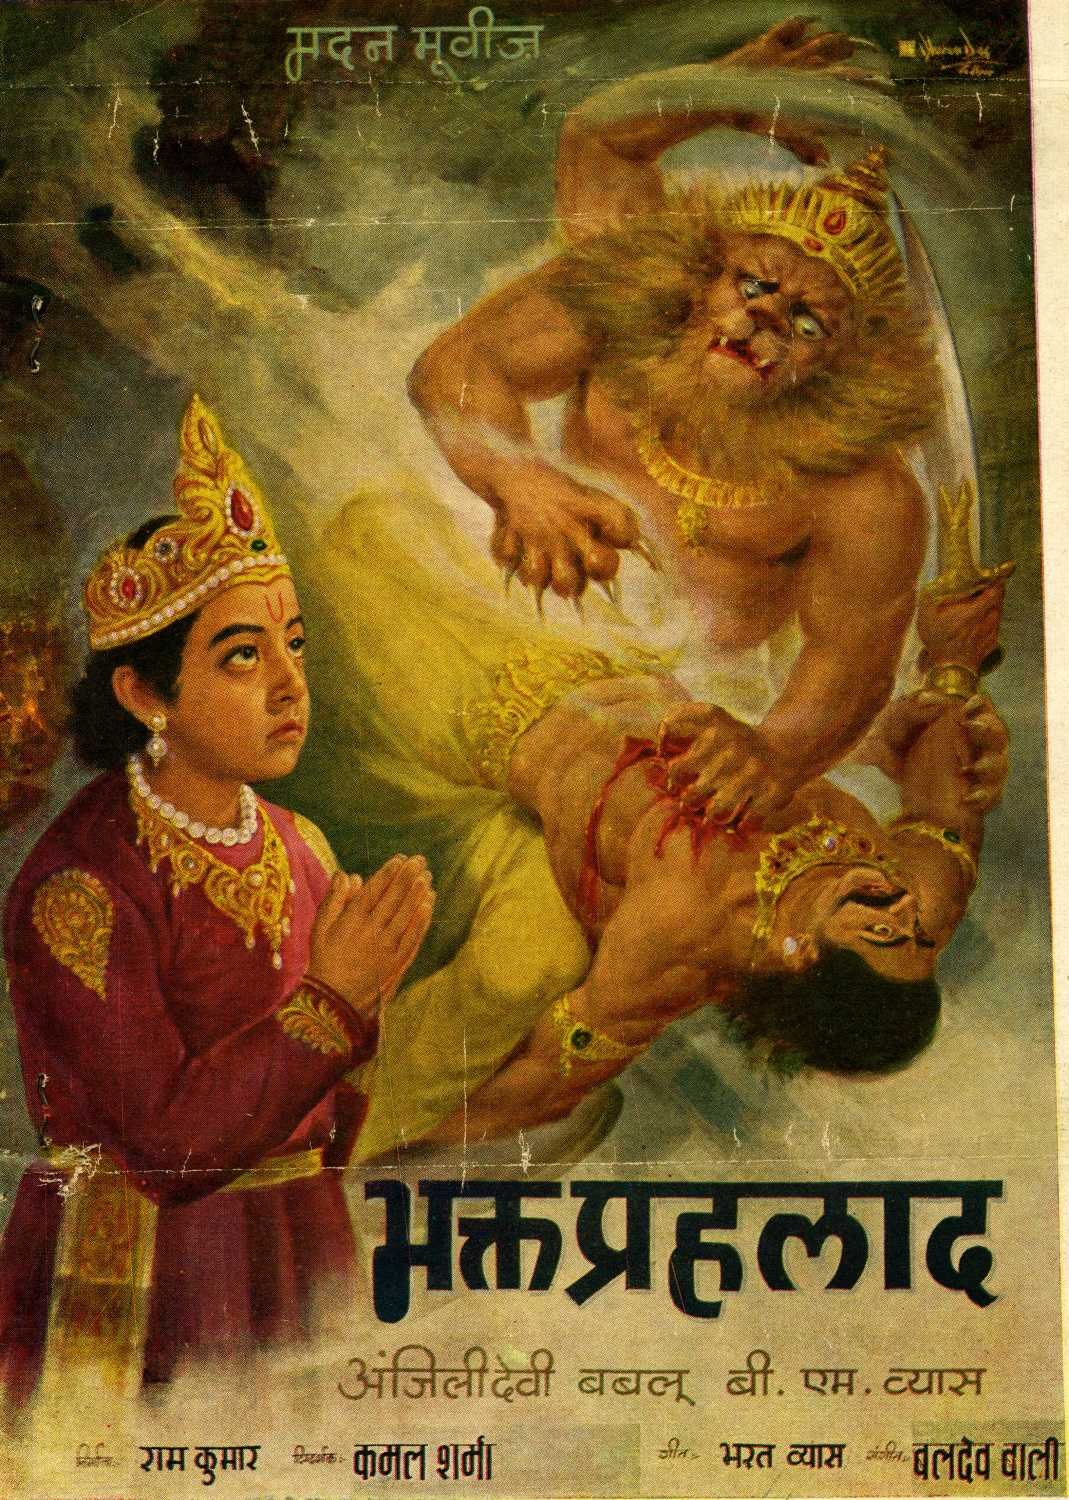 Narsingh killing Hirnaykashyap